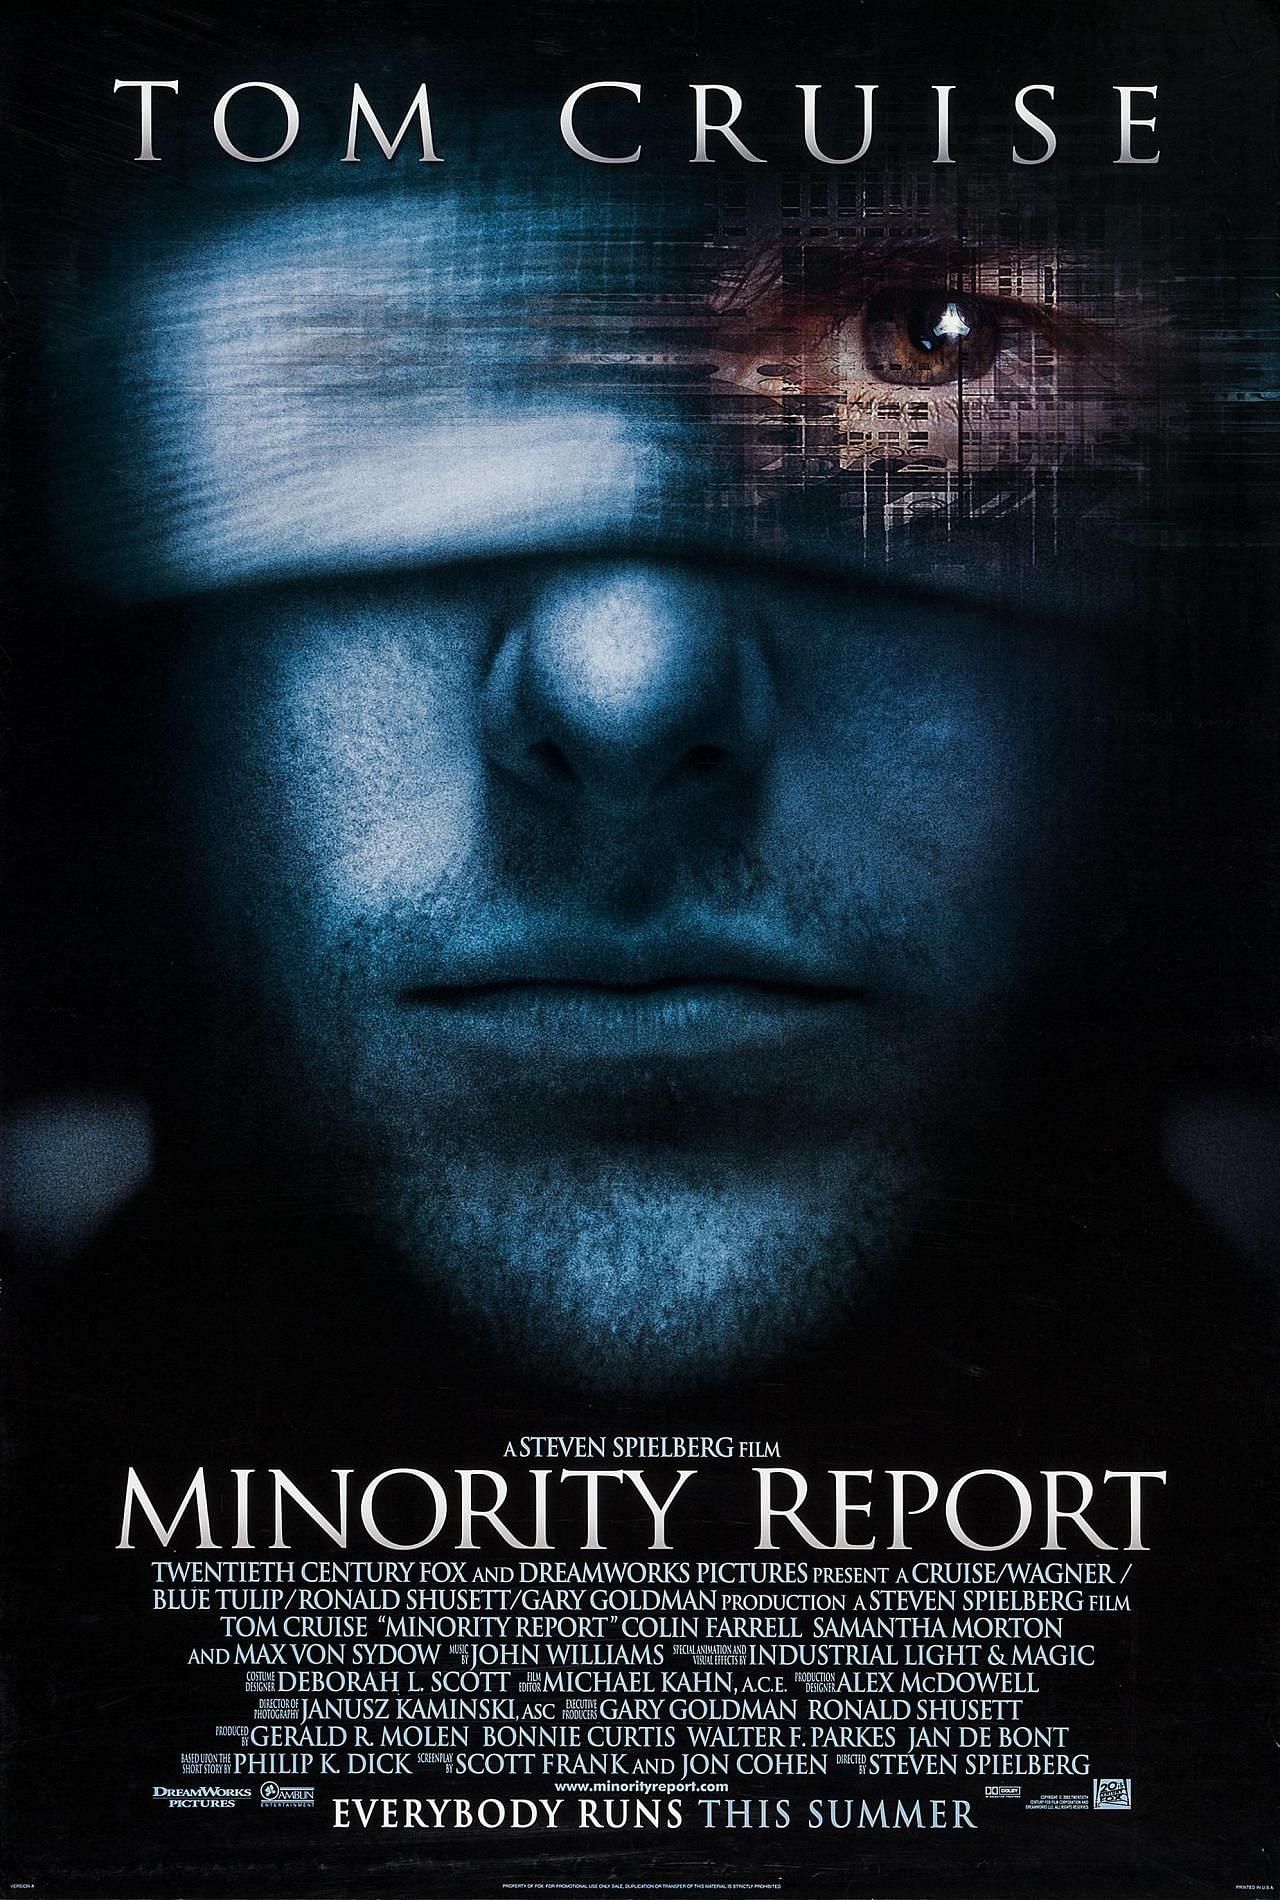 Minority Report, 2002 (Image via 20th Century Studios)